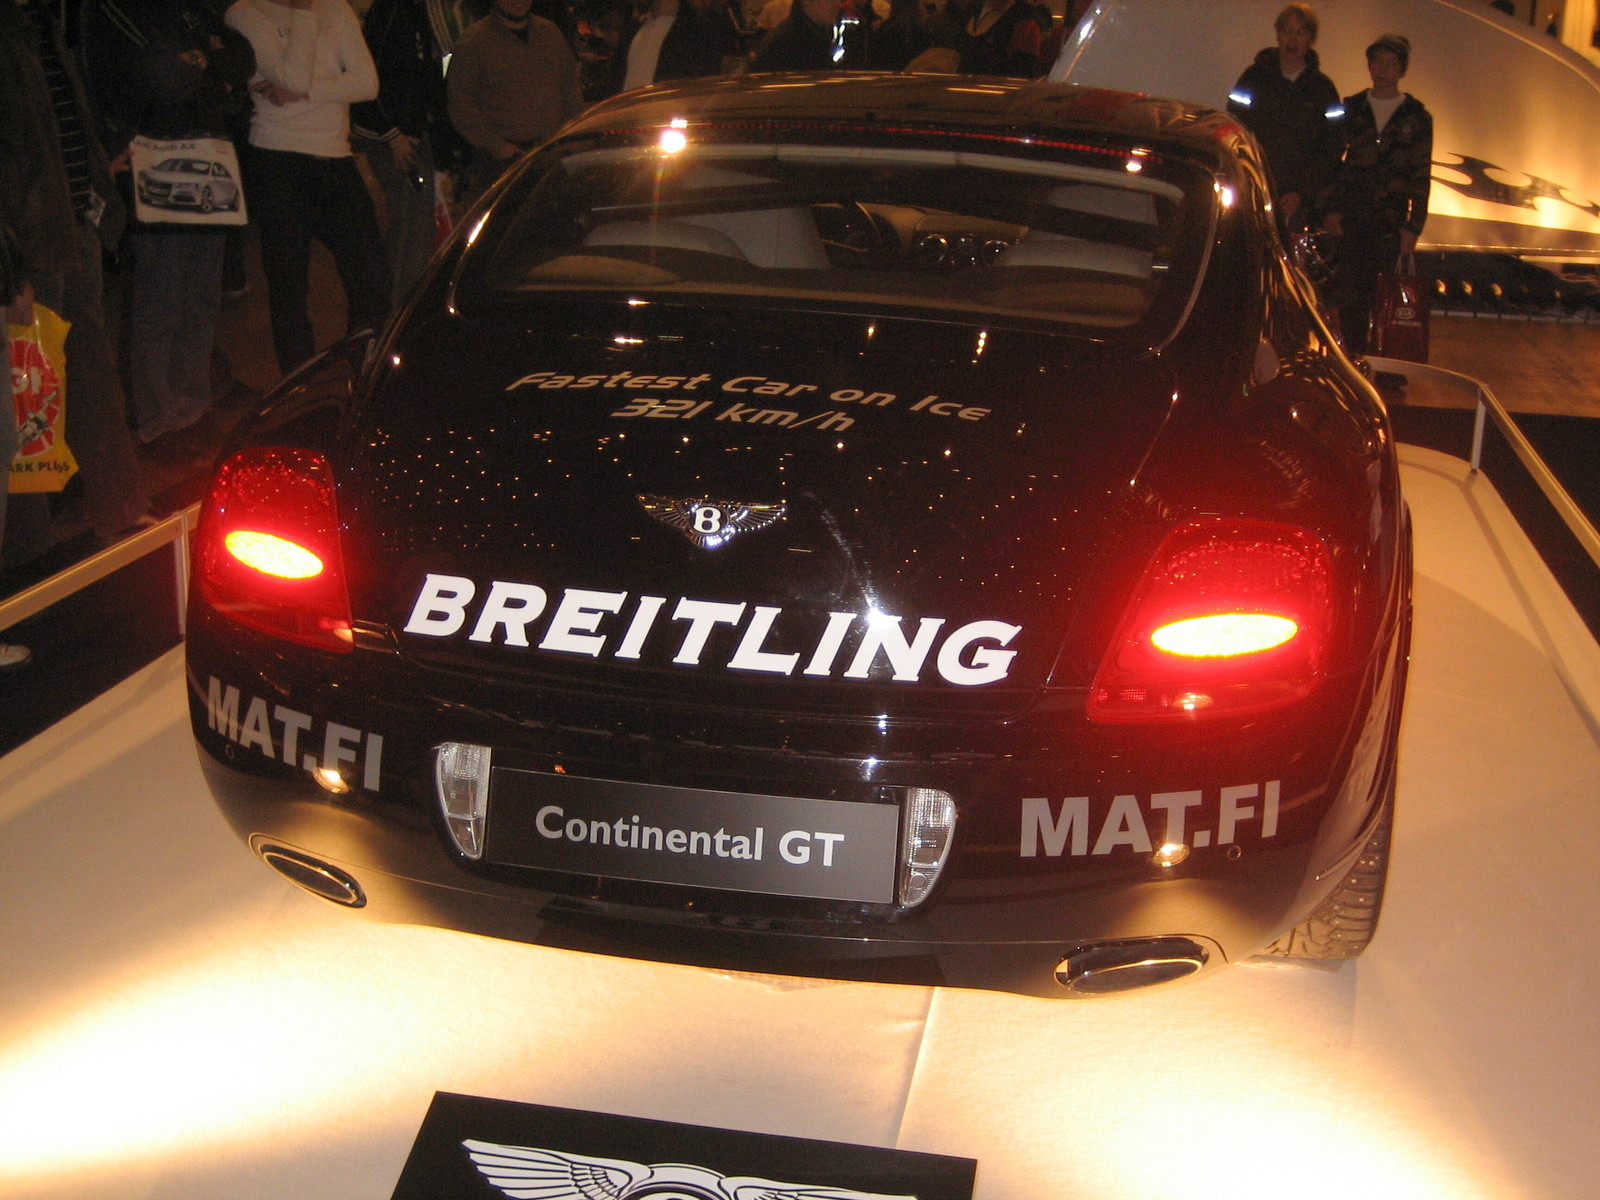 Helsinki motor show 2007, Bentley Continental GT. Fastest Car on Ice, 321 km/h, Breitling